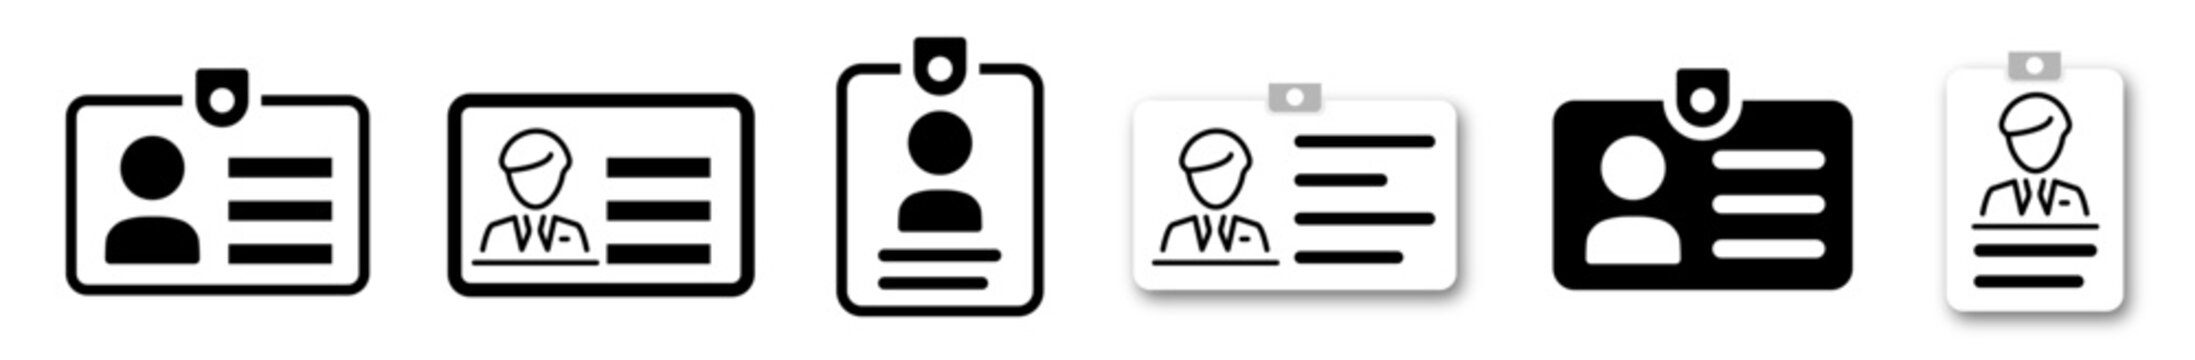 ID Card icon set. Identification card outline icon set. Driver's license Identification card symbol. Editable stroke. Identification card icon set. Vector illustration